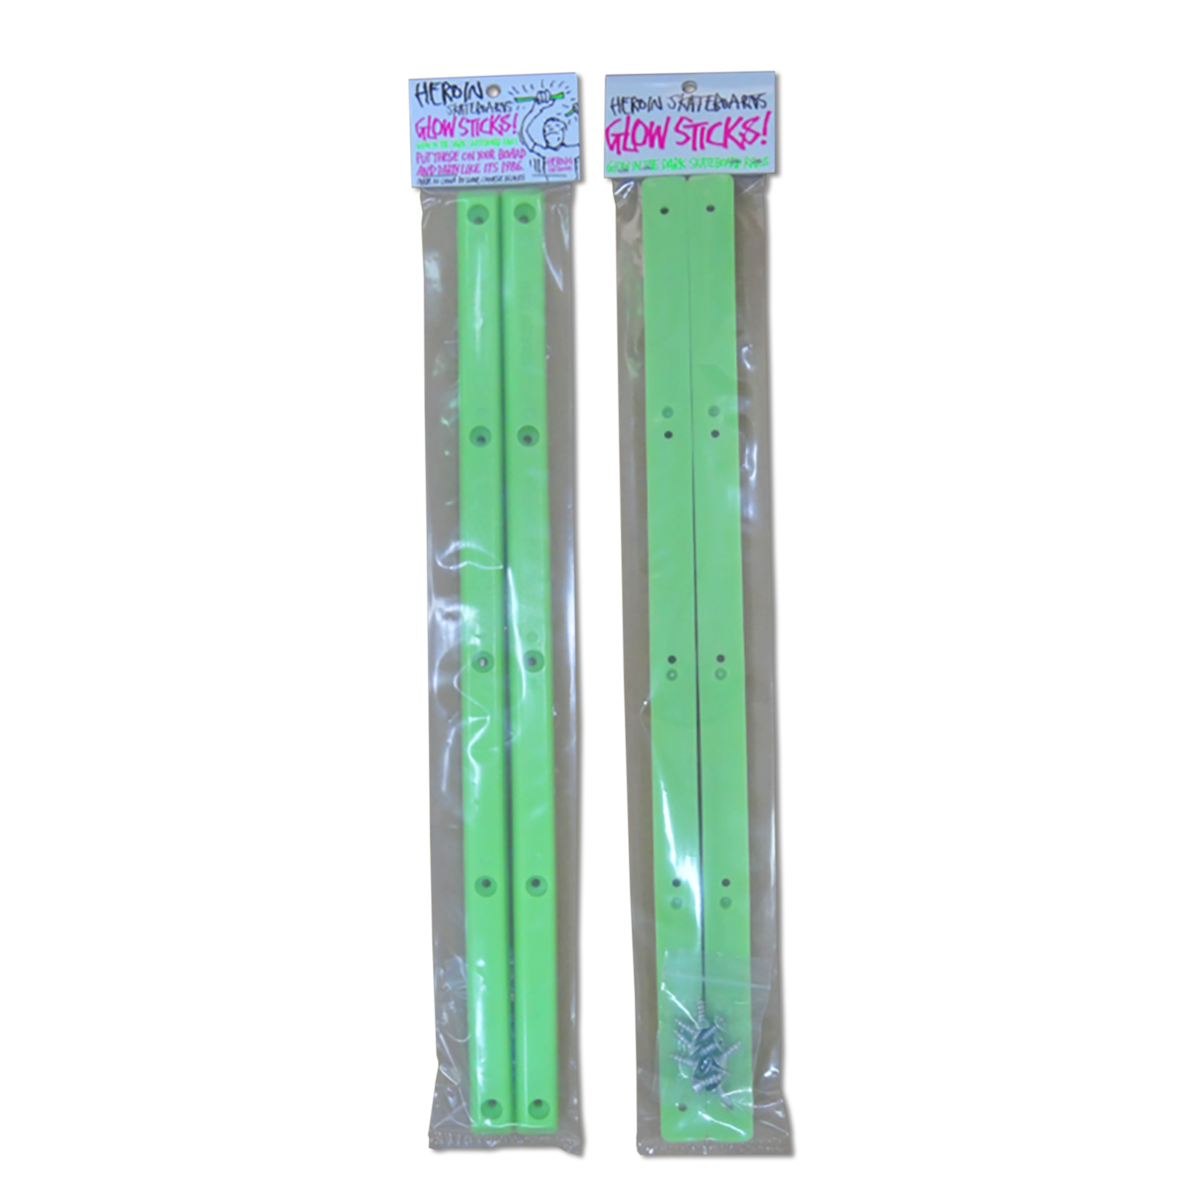 Heroin Glow Stick Rails